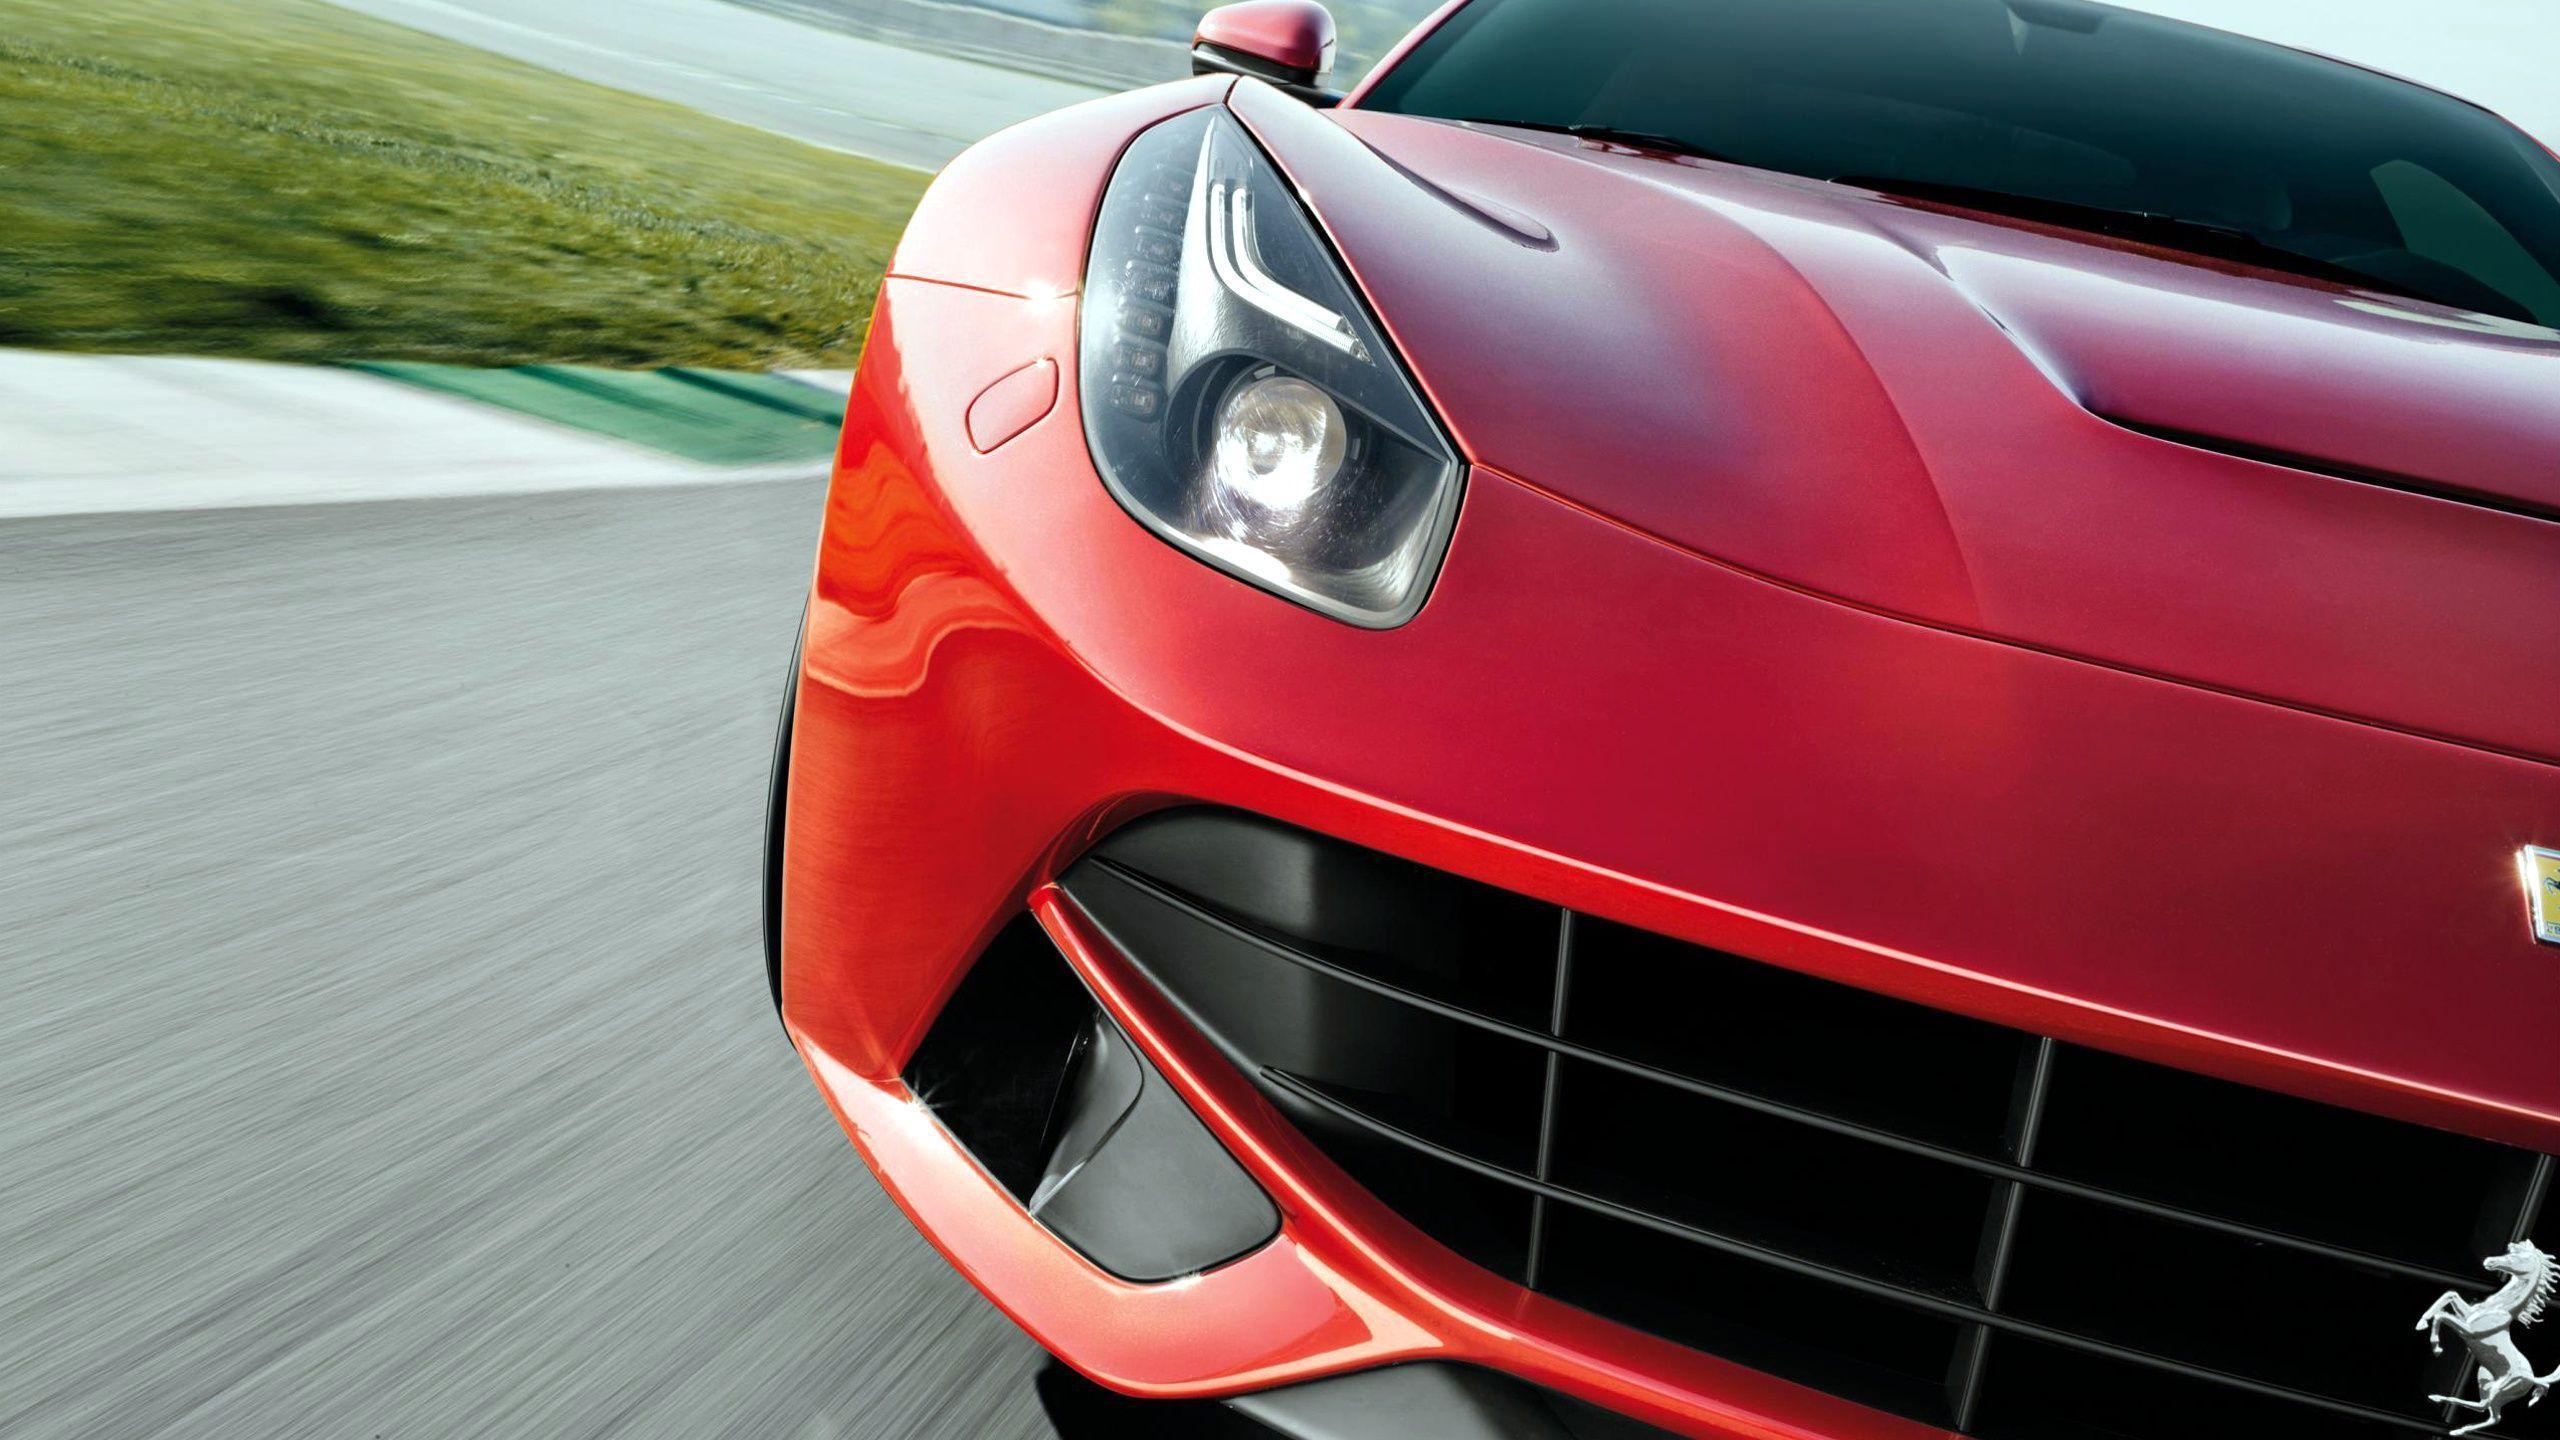 Ferrari HD Wallpaper background for your desktop. All Ferrari